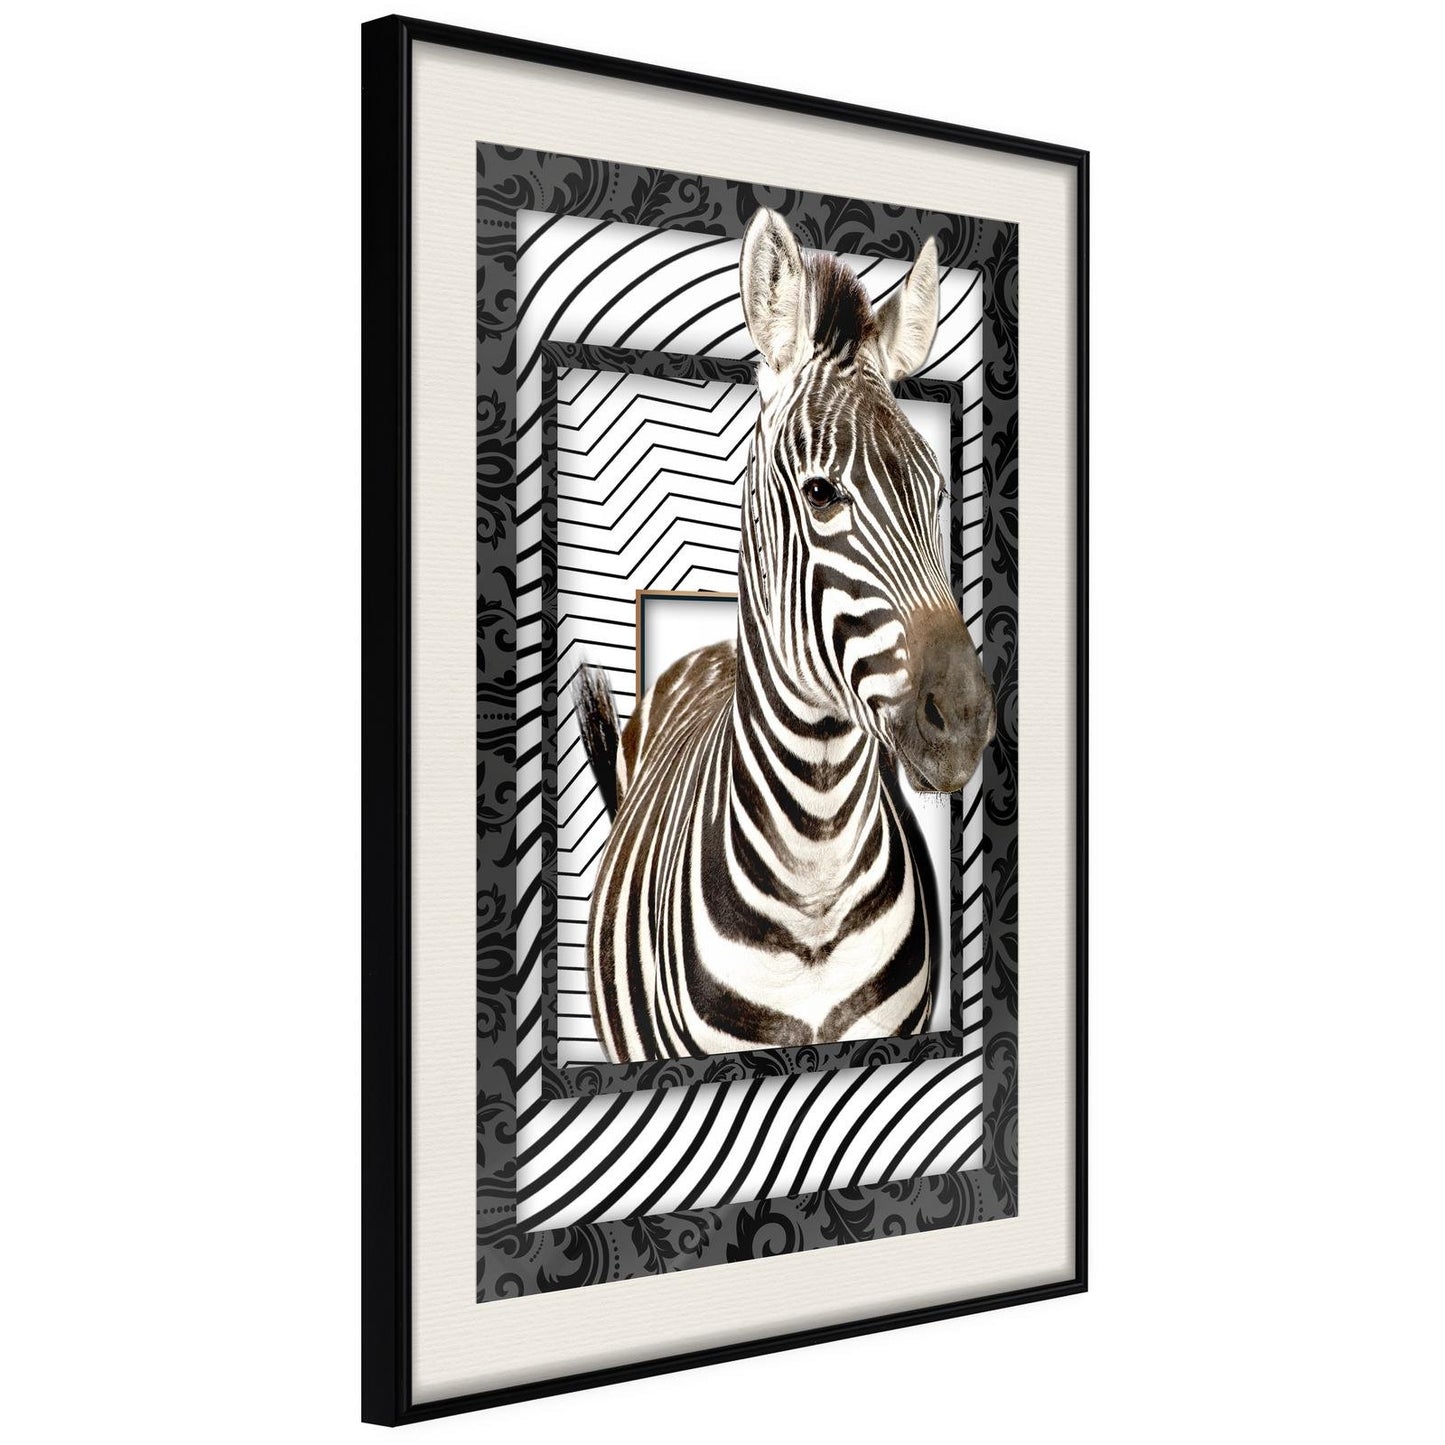 Zebra im Rahmen